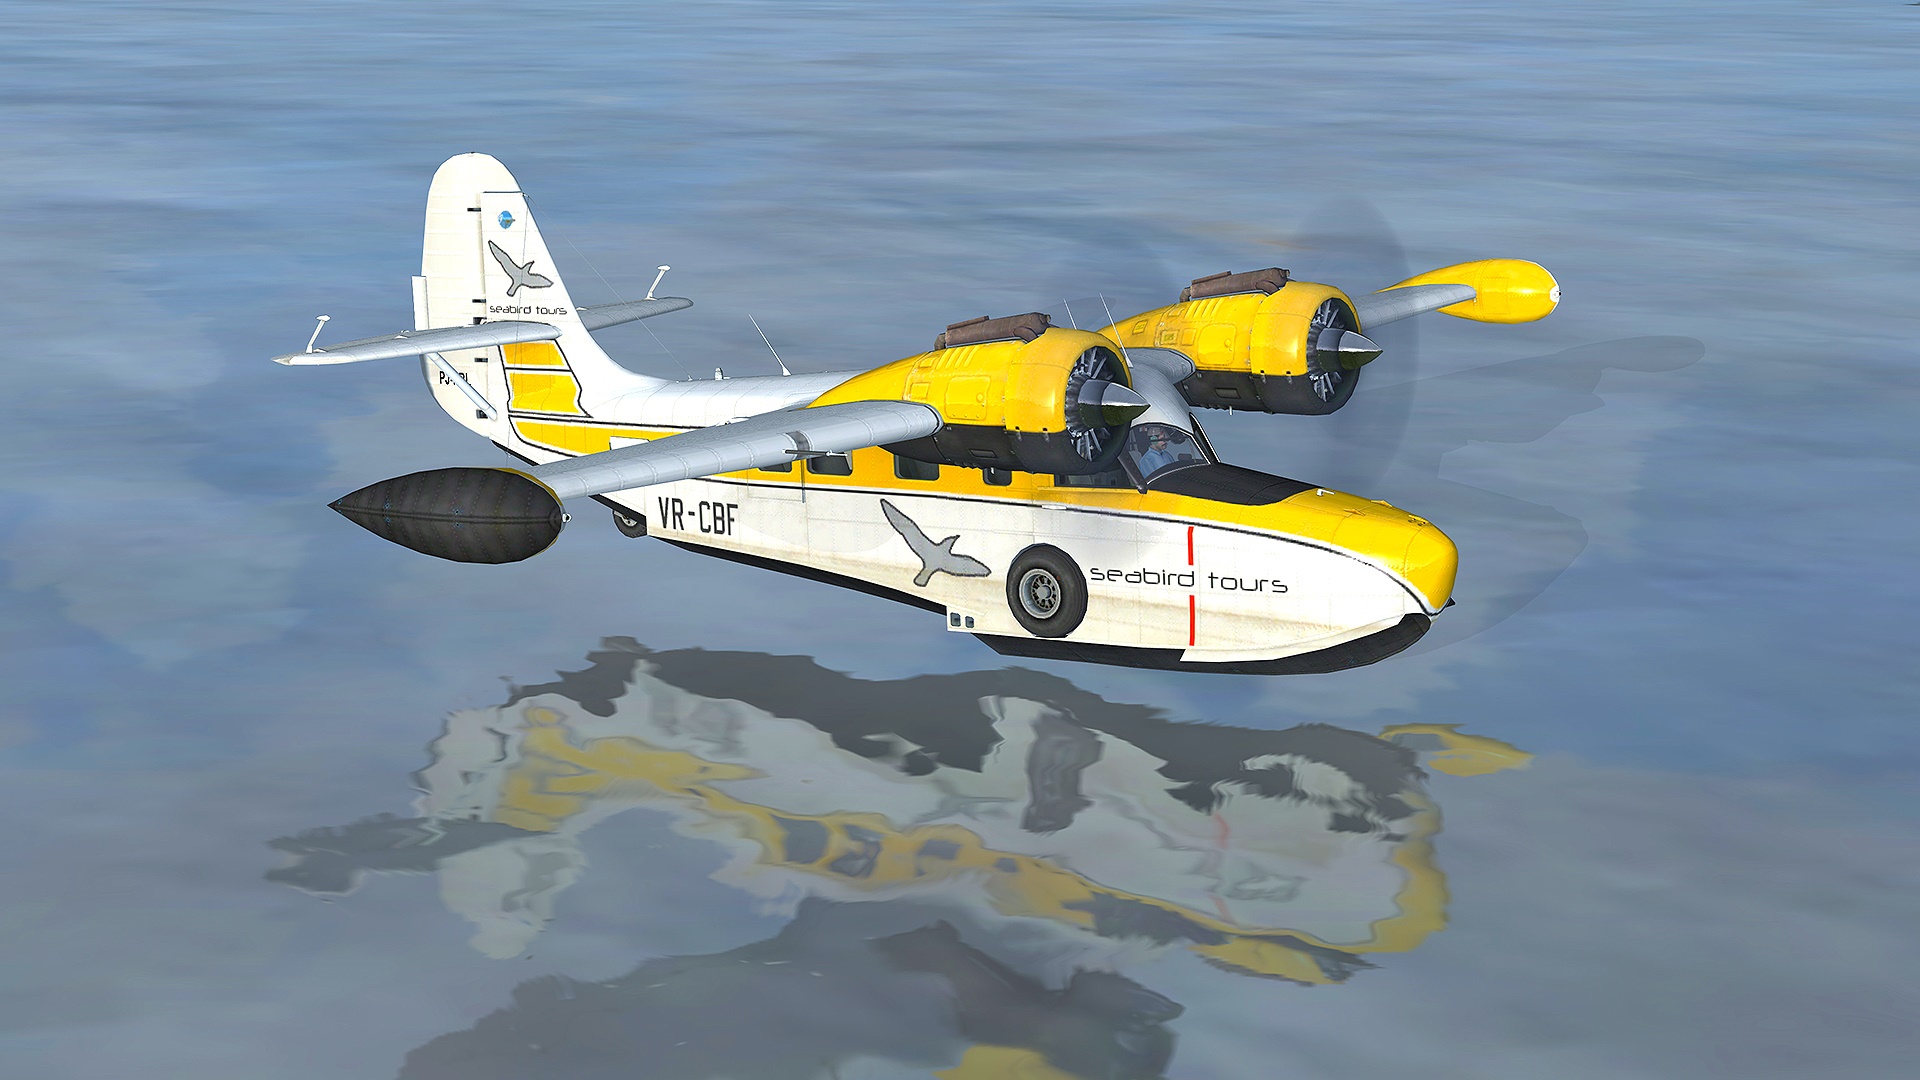 Microsoft Flight Simulator VR is coming to closed beta